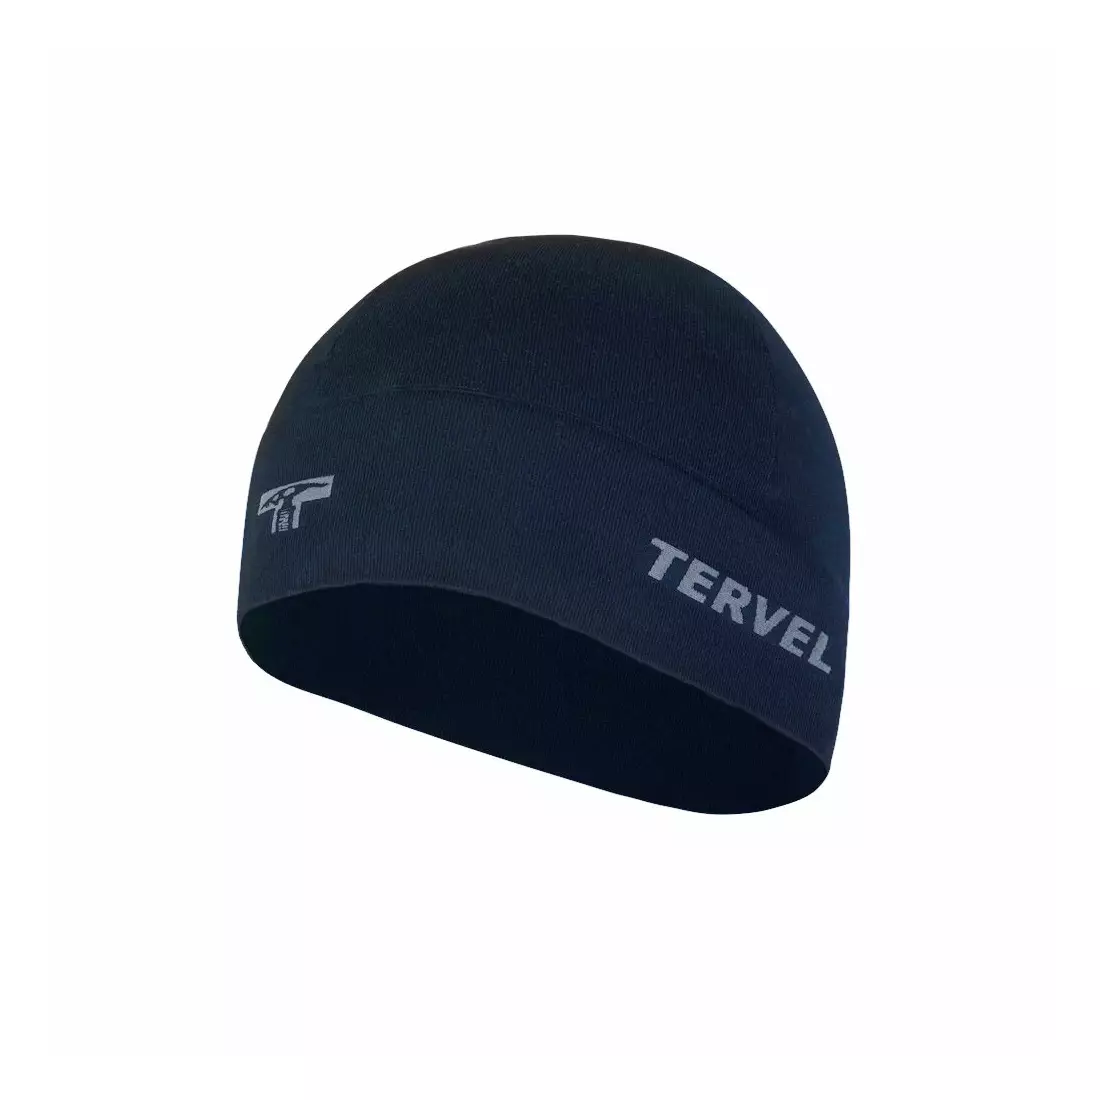 TERVEL 7001 - COMFORTLINE - training cap, color: Navy, size: Universal